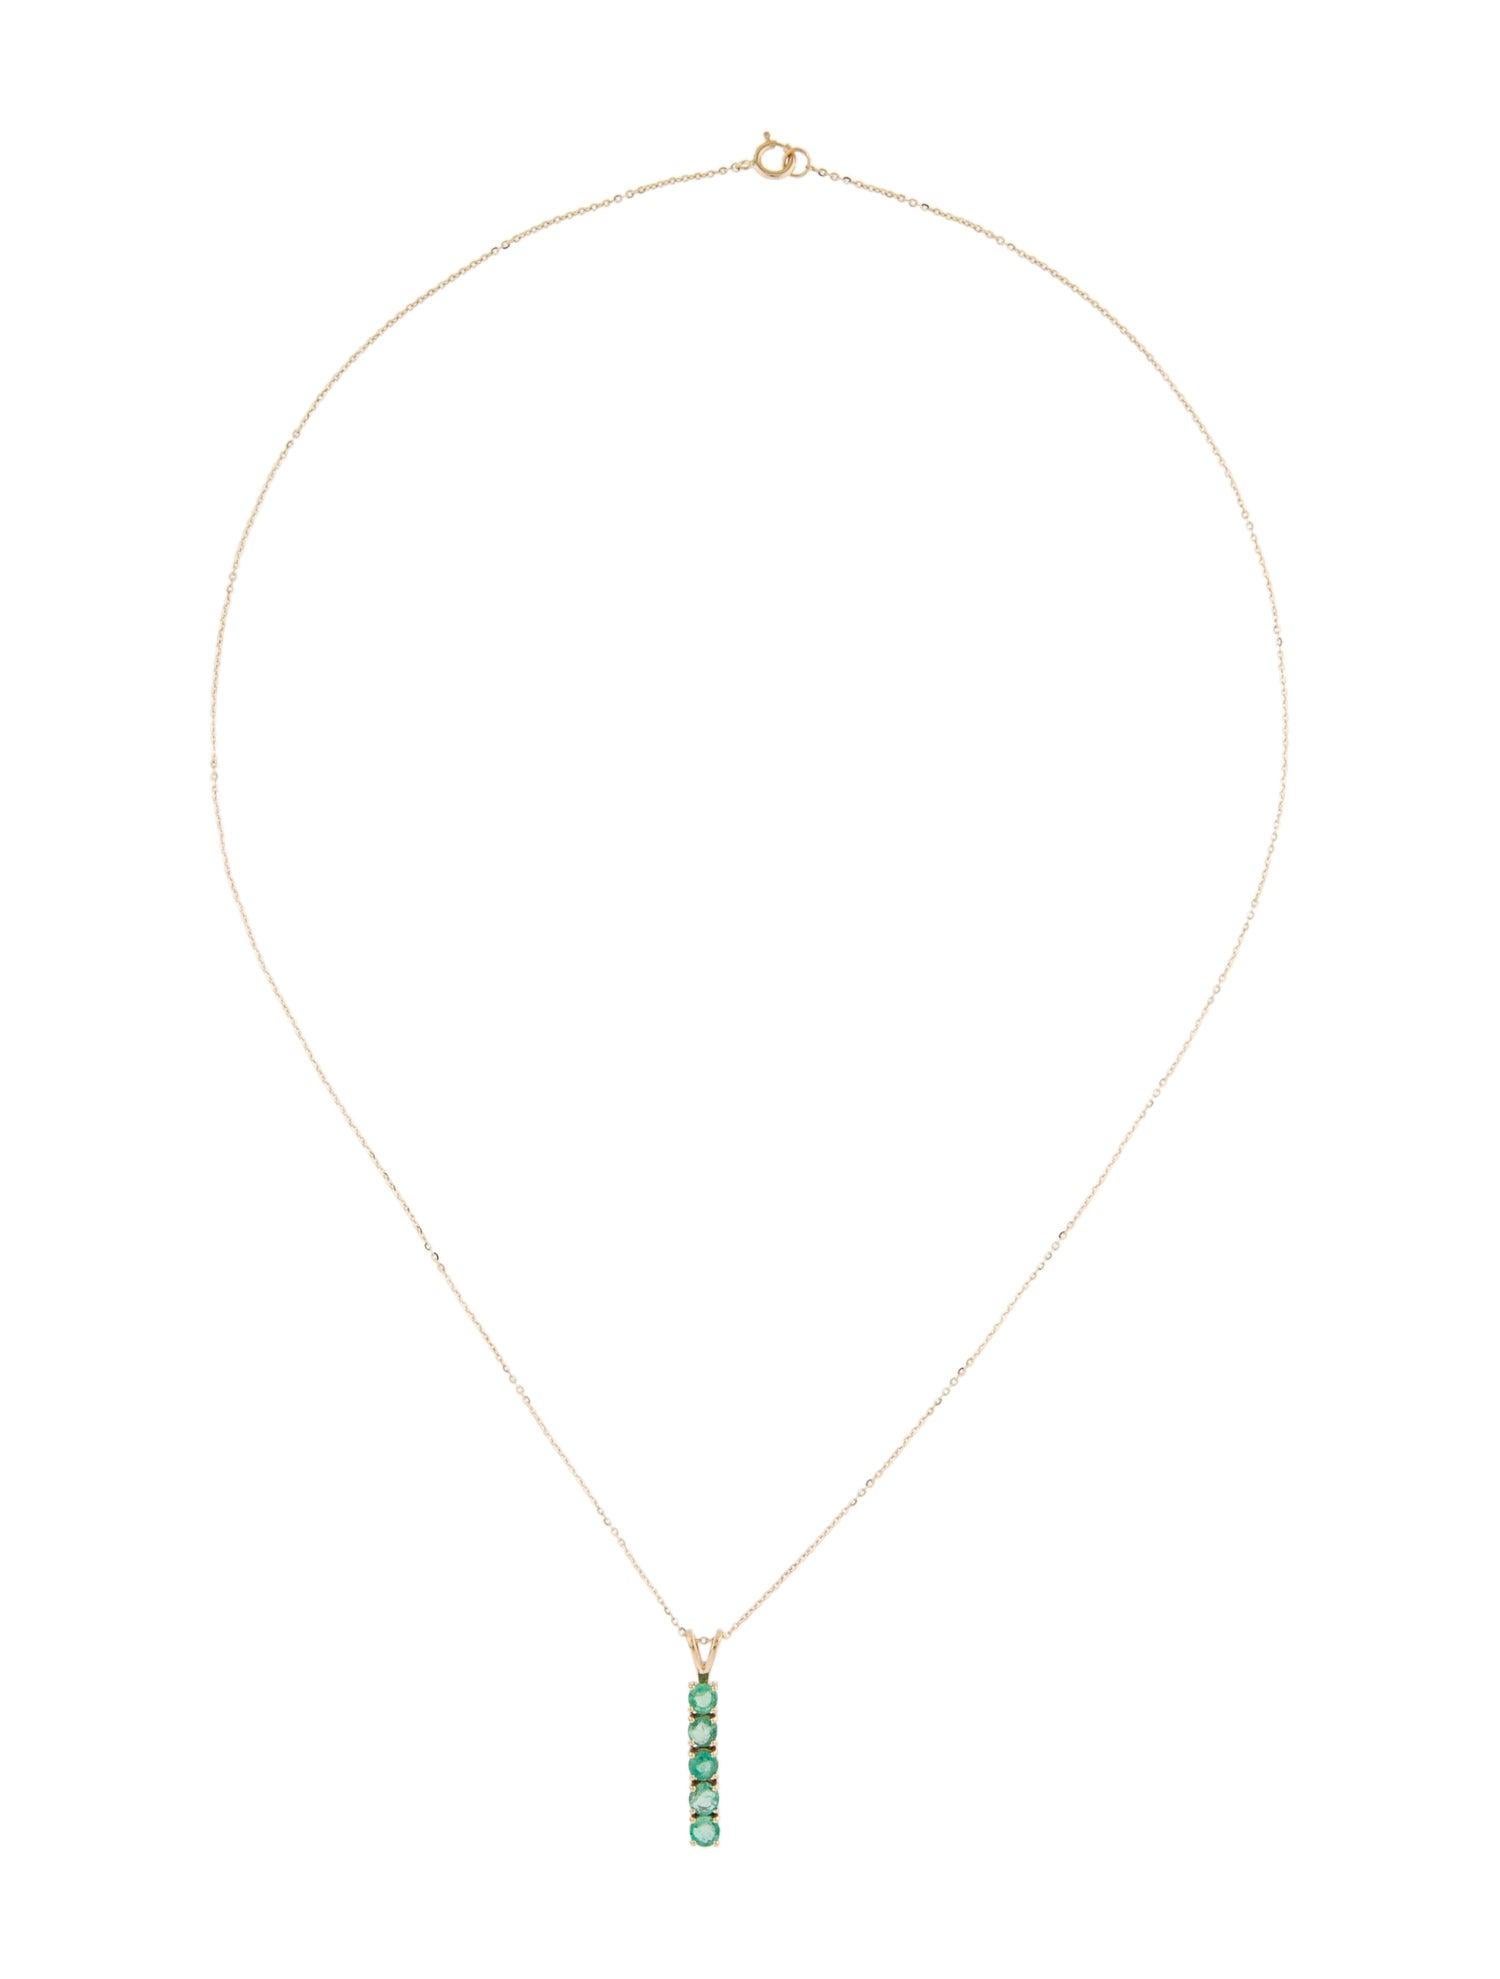 Women's Elegant 14K Emerald Pendant Necklace: Exquisite Luxury Statement Jewelry Piece For Sale